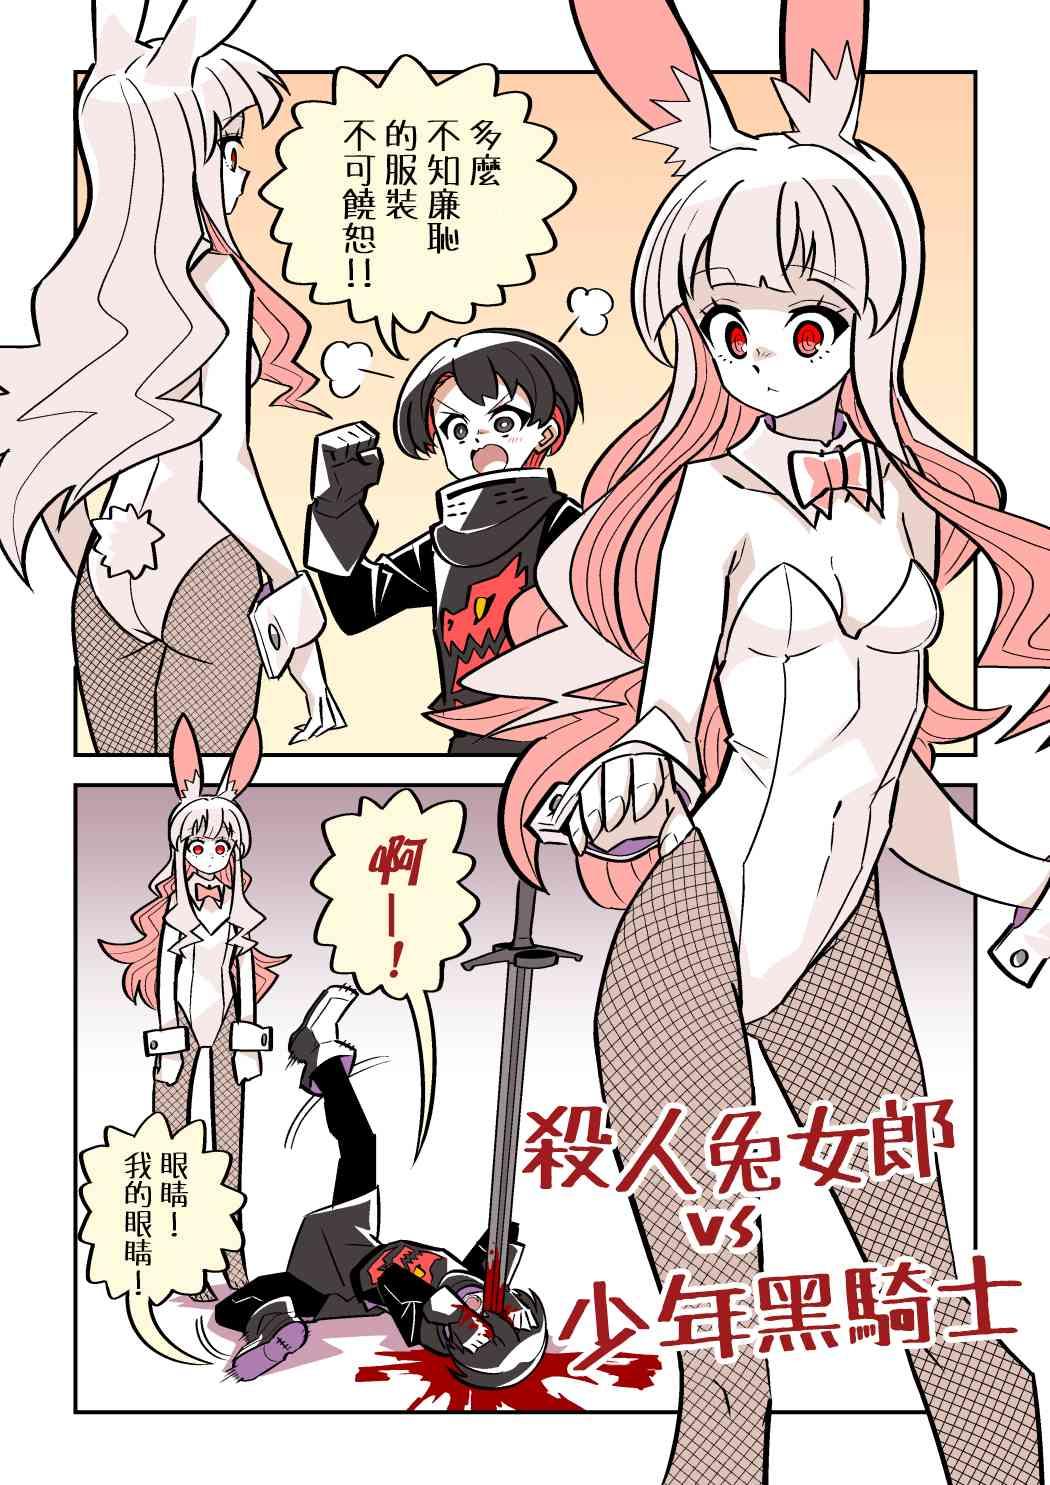 Murder Rabbit Girl vs Series 杀人兔娘 9